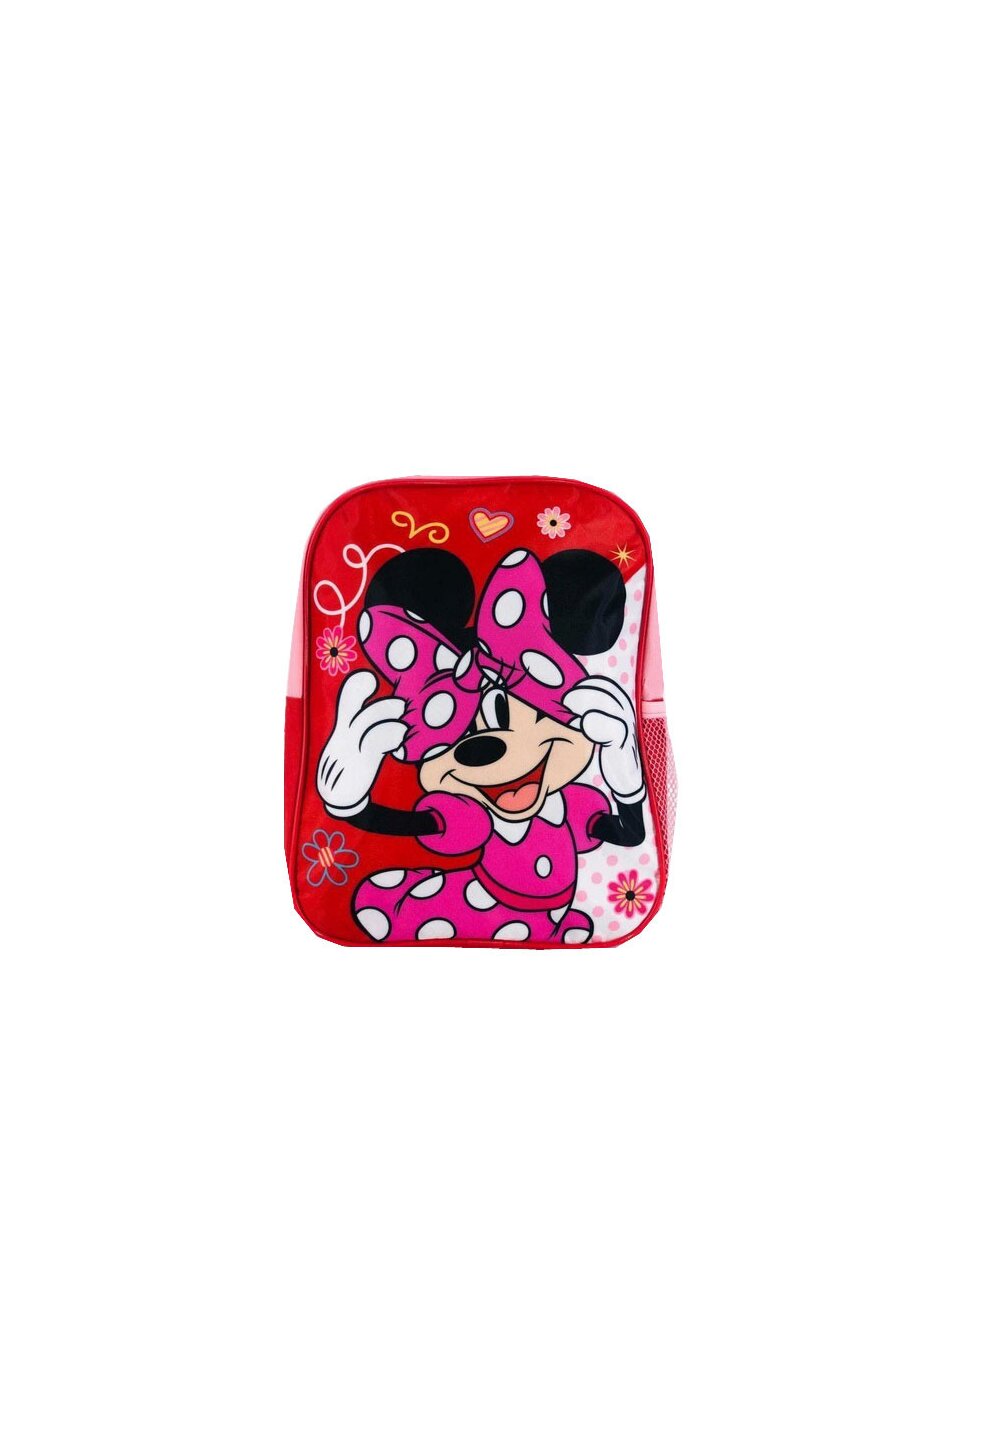 Ghiozdan Minnie Mouse, rosu cu floricele, 32x26x10cm DISNEY